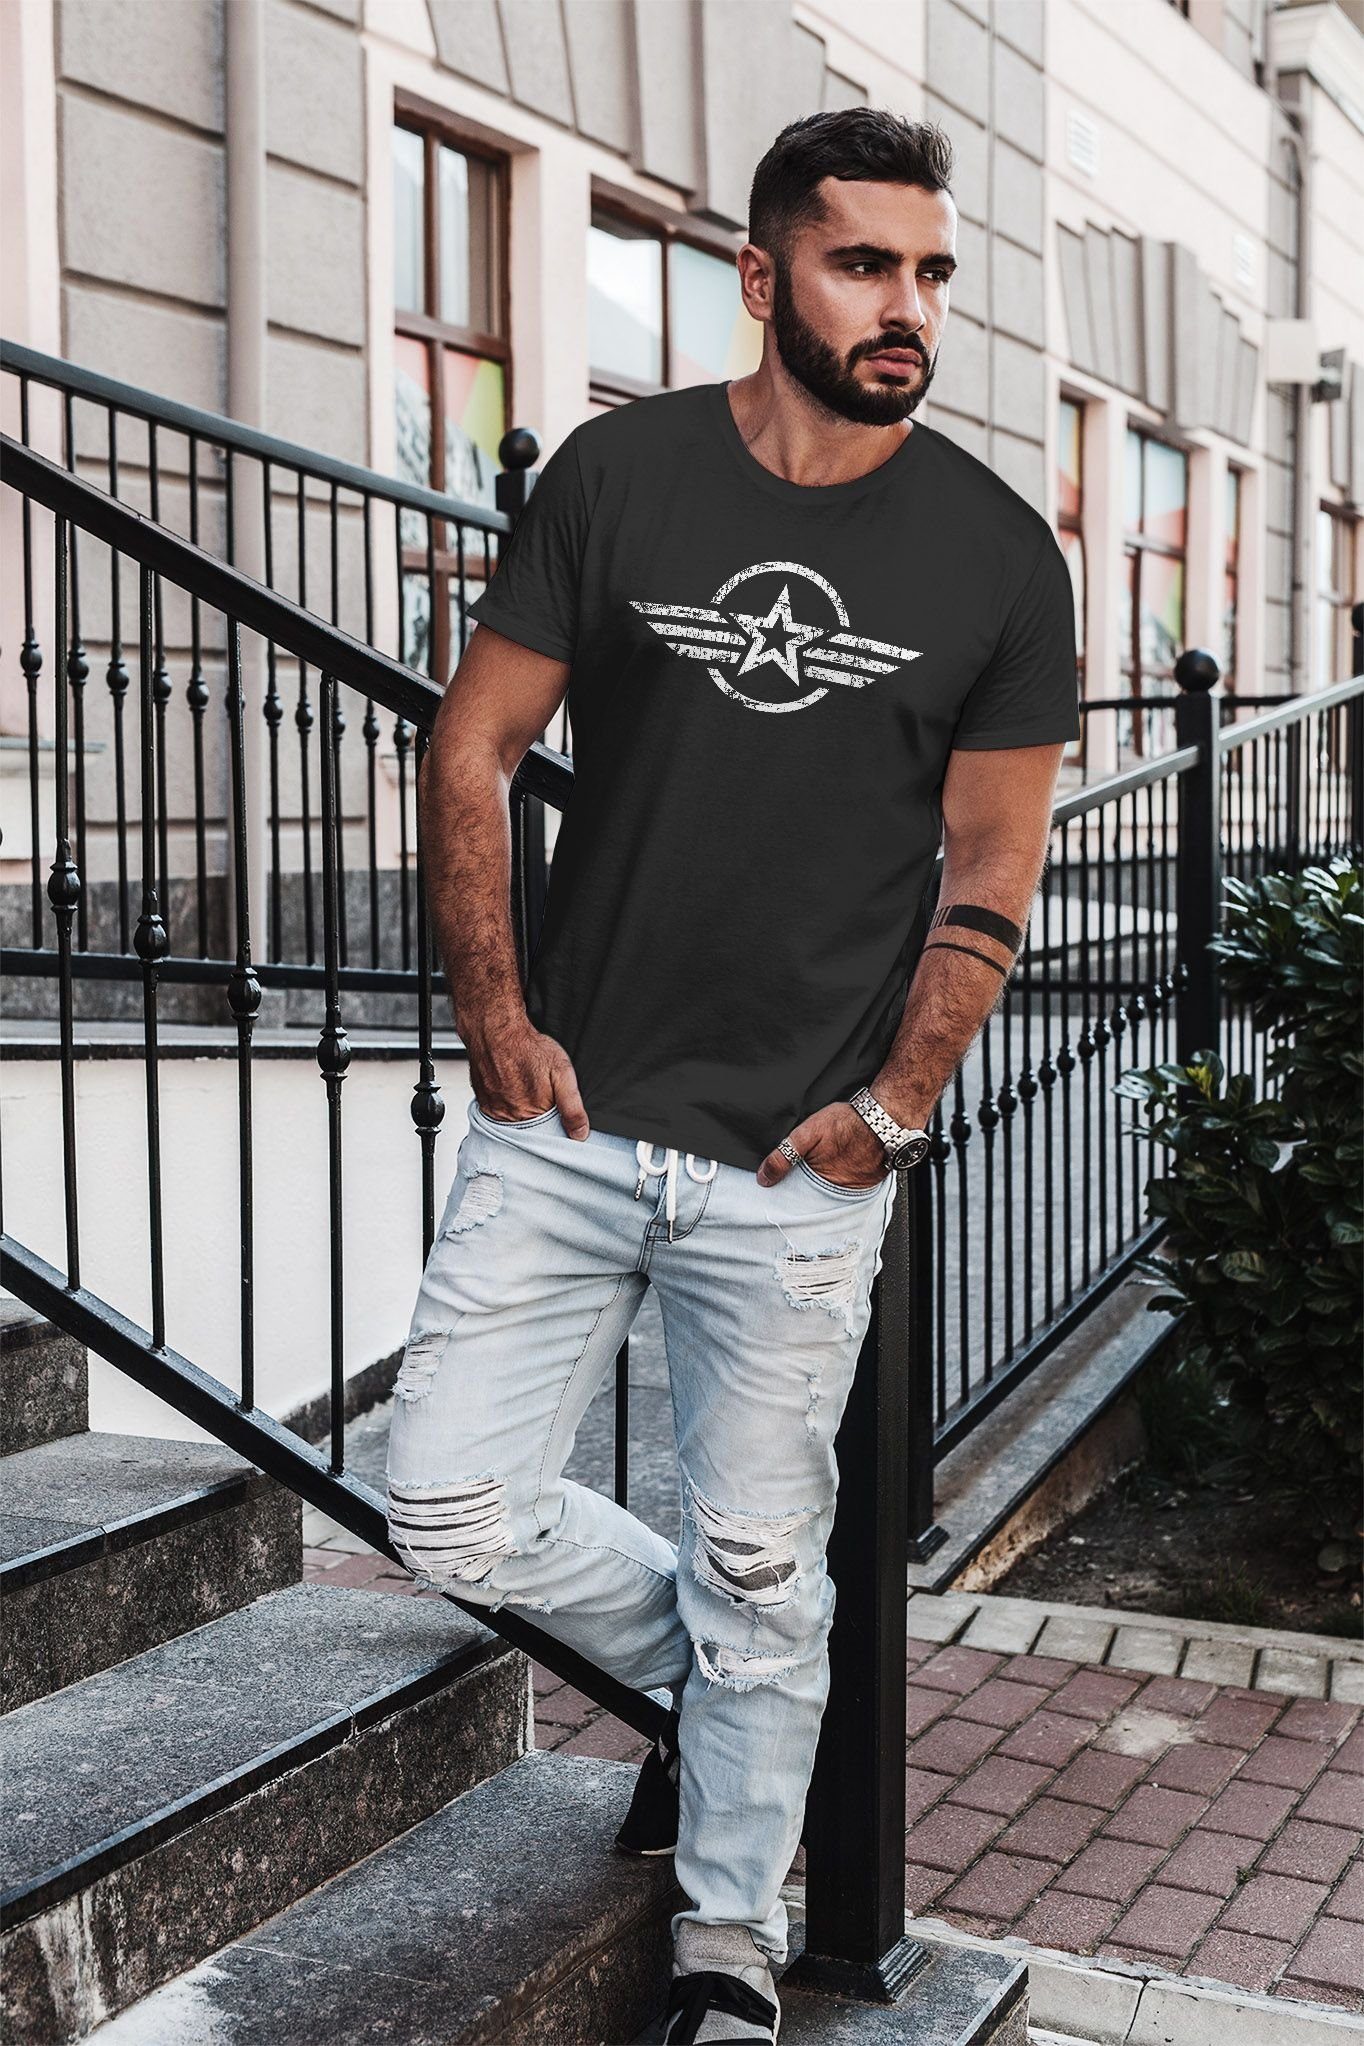 Neverless Print-Shirt Neverless® Herren T-Shirt Print schwarz Aufdruck Emblem Airforce mit Fashion Streetstyle